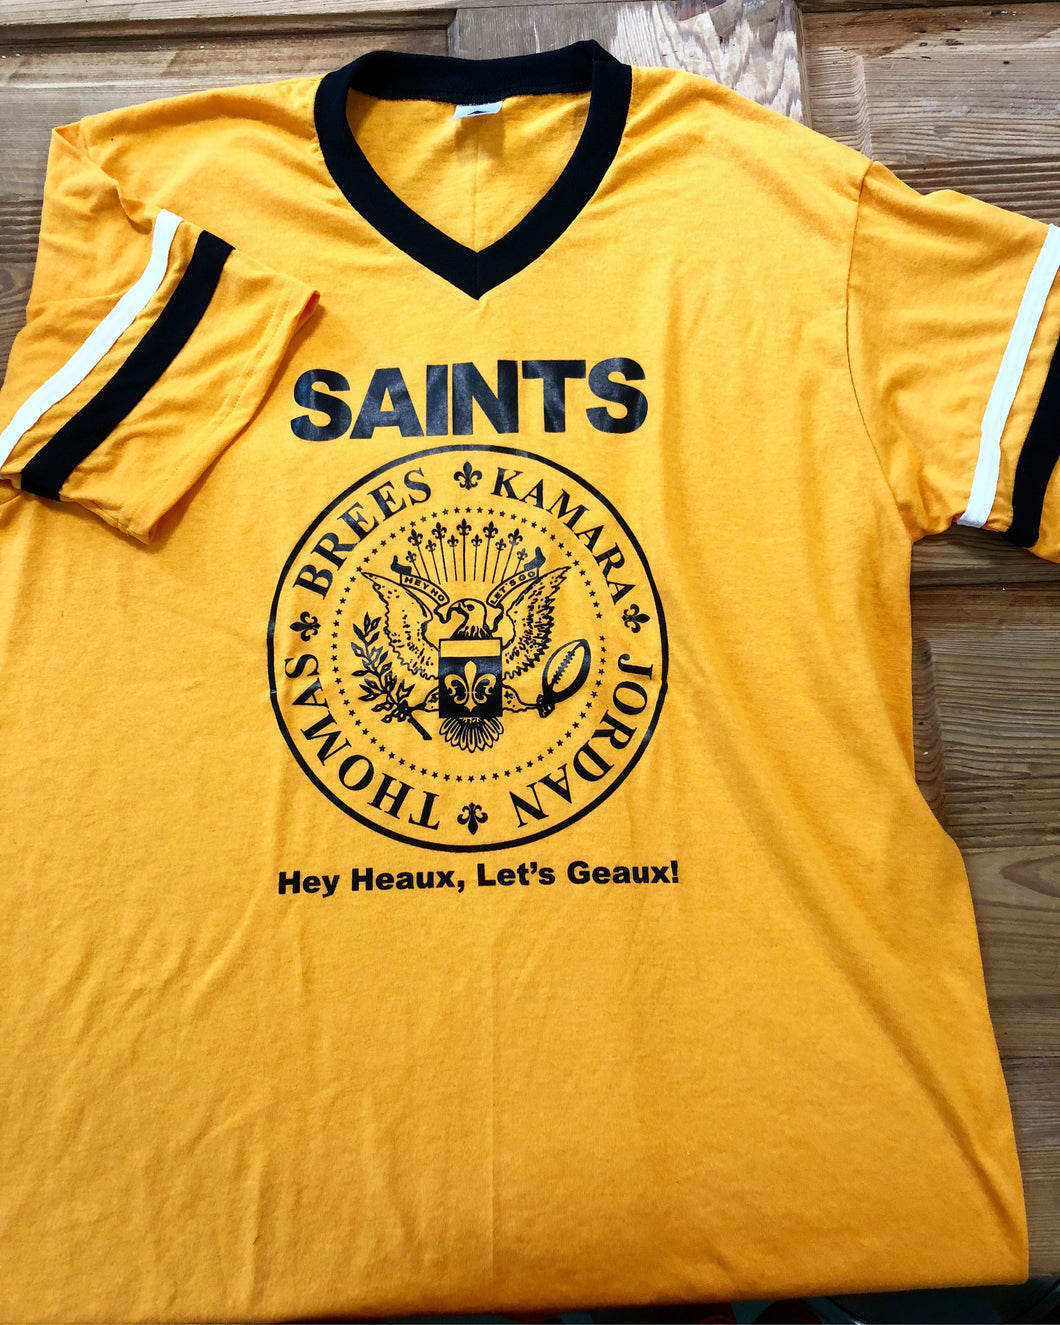 saints jersey shirt